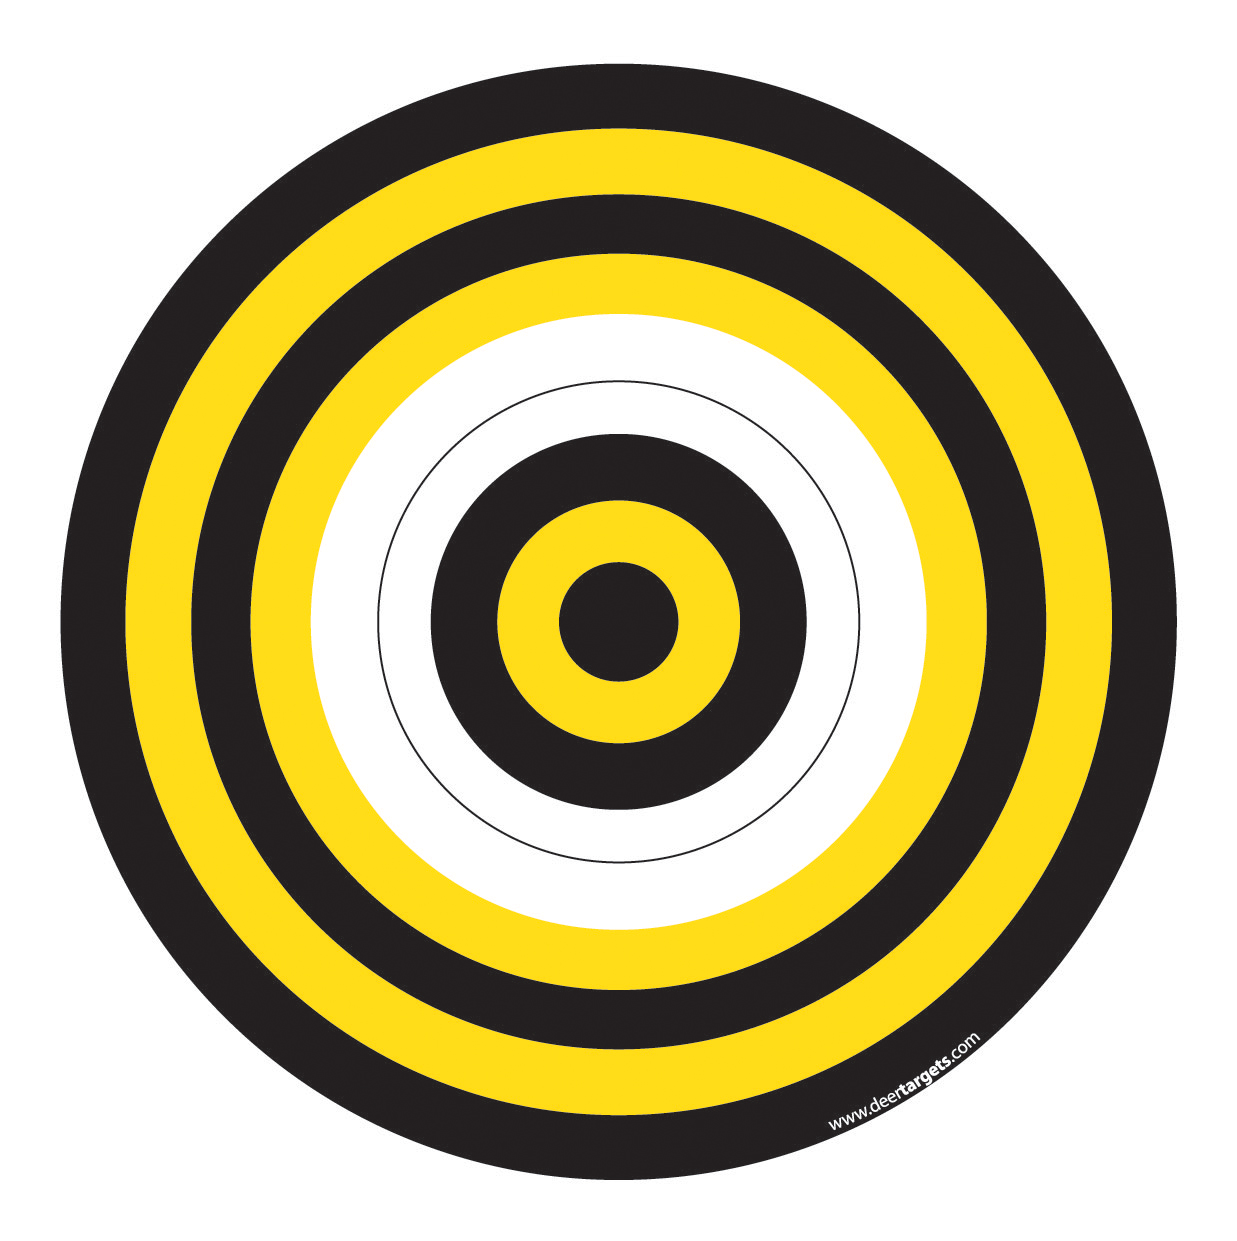 Printable Targets | Printable Archery Targets | Archery Targets